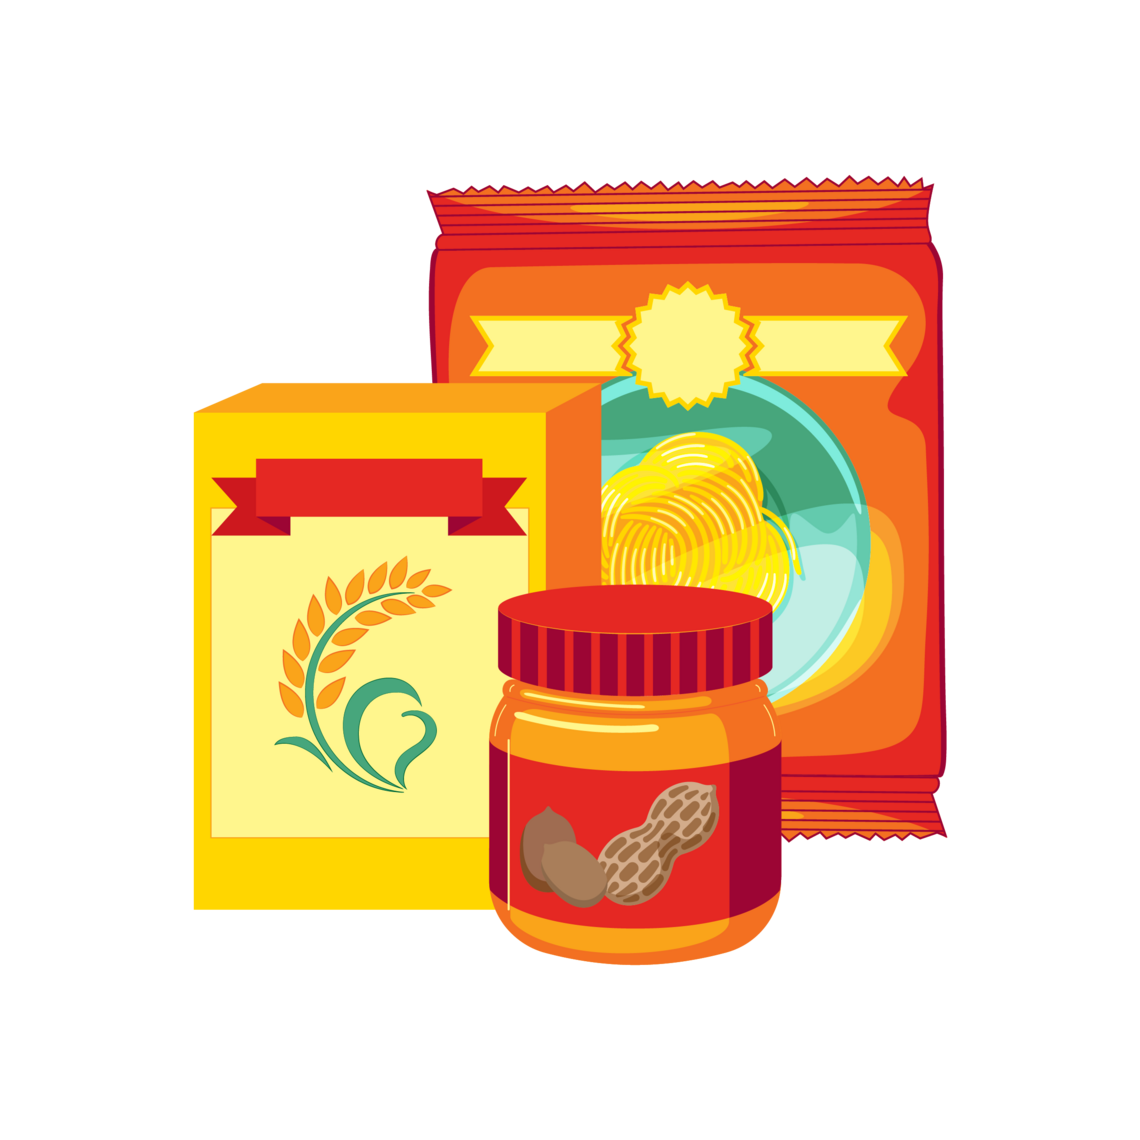 Illustration of packaged foods